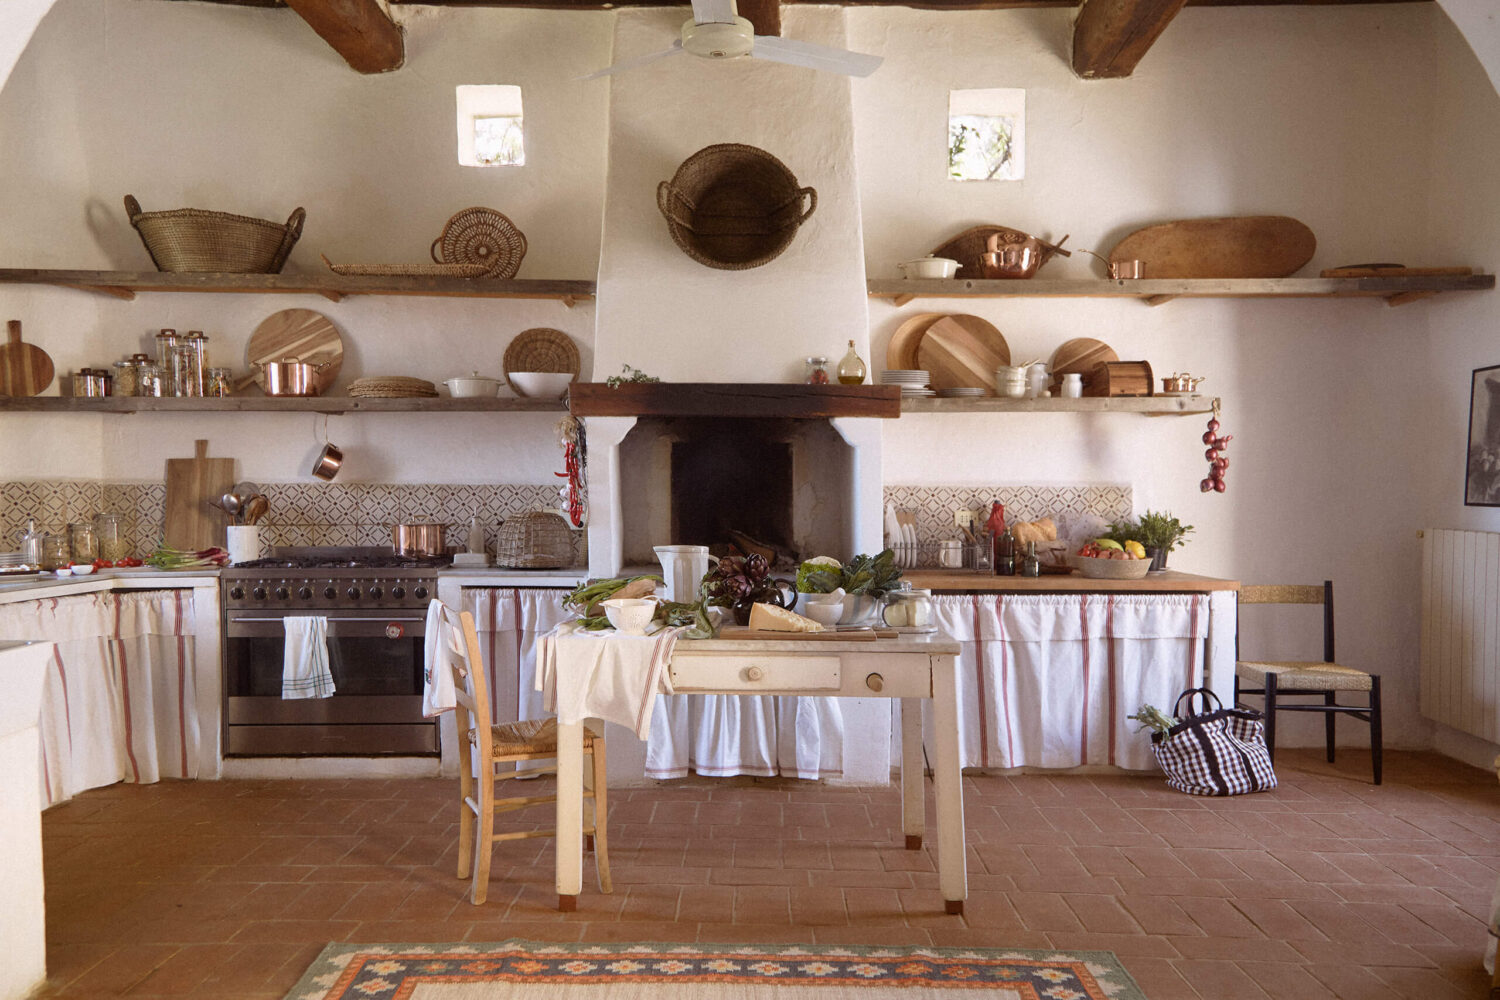 kitchen-skirting-mediterranean-style-open-shelves-terracotta-floor-villa-tuscany-zara-home-nordroom